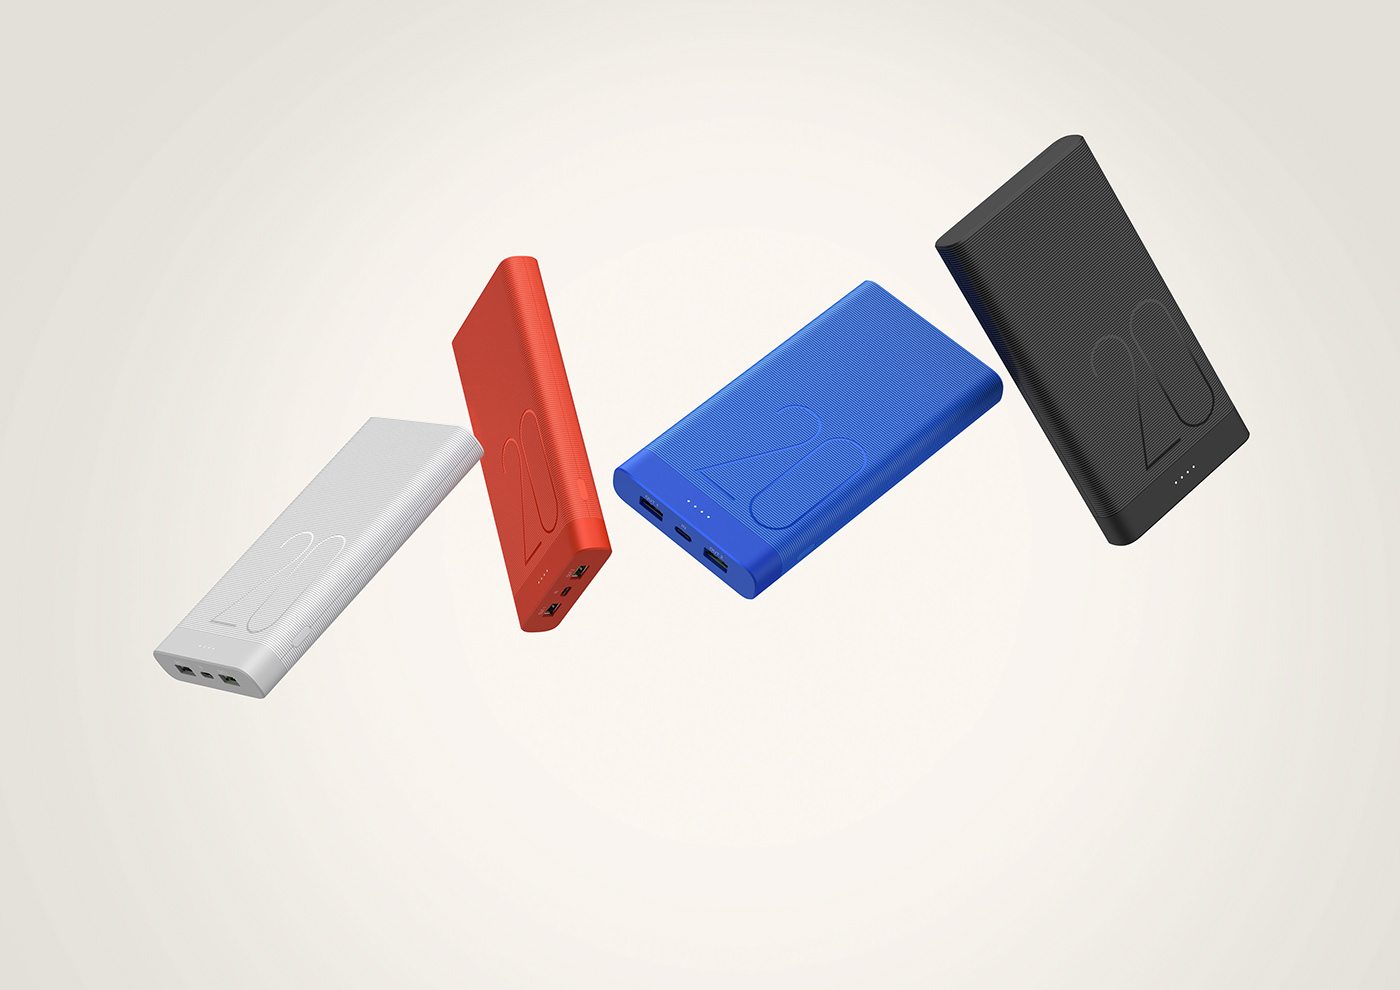 design iphone POWERBANK industrial design  product 3D smartphone 3C